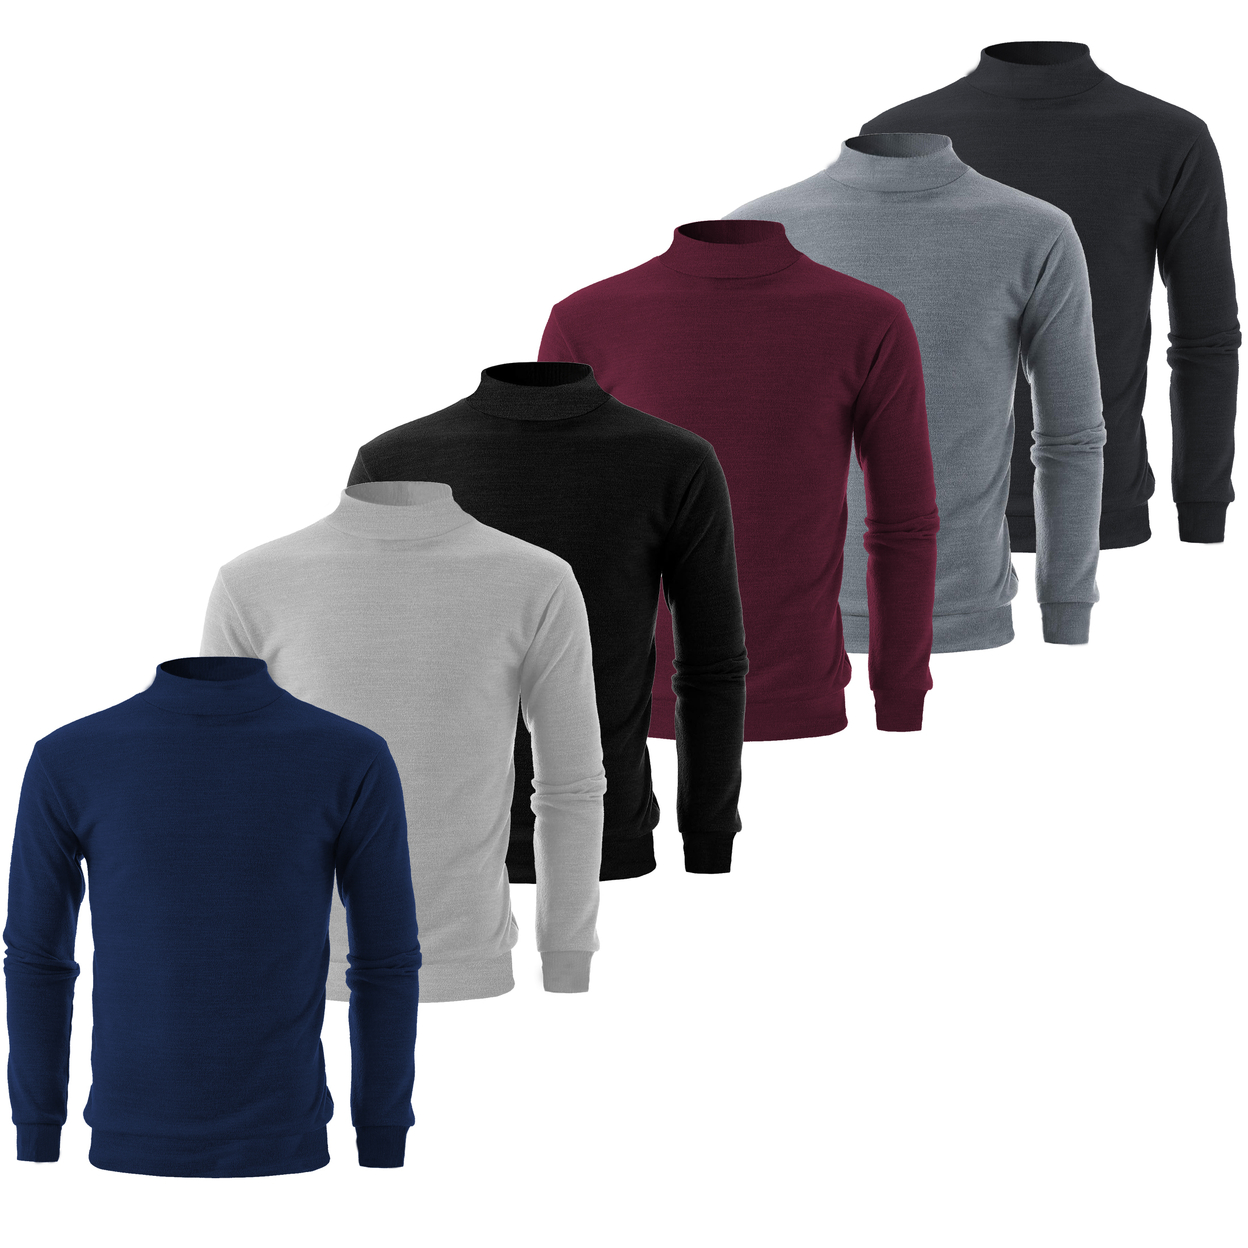 Multi-Pack: Men's Winter Warm Cozy Knit Slim Fit Mock Neck Sweater - 2-pack, Xx-large